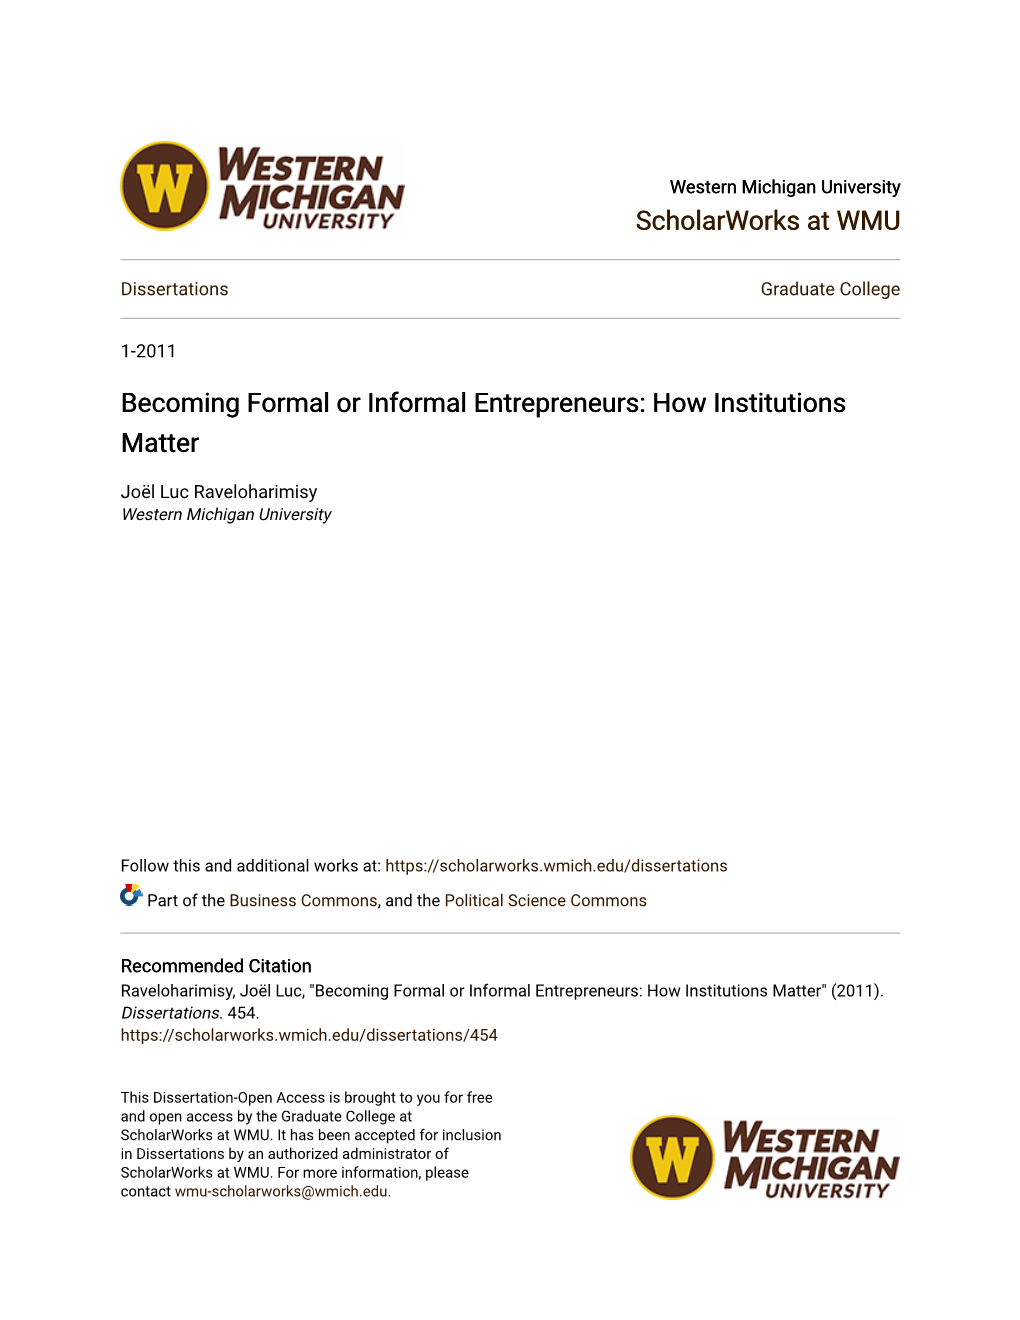 Becoming Formal Or Informal Entrepreneurs: How Institutions Matter